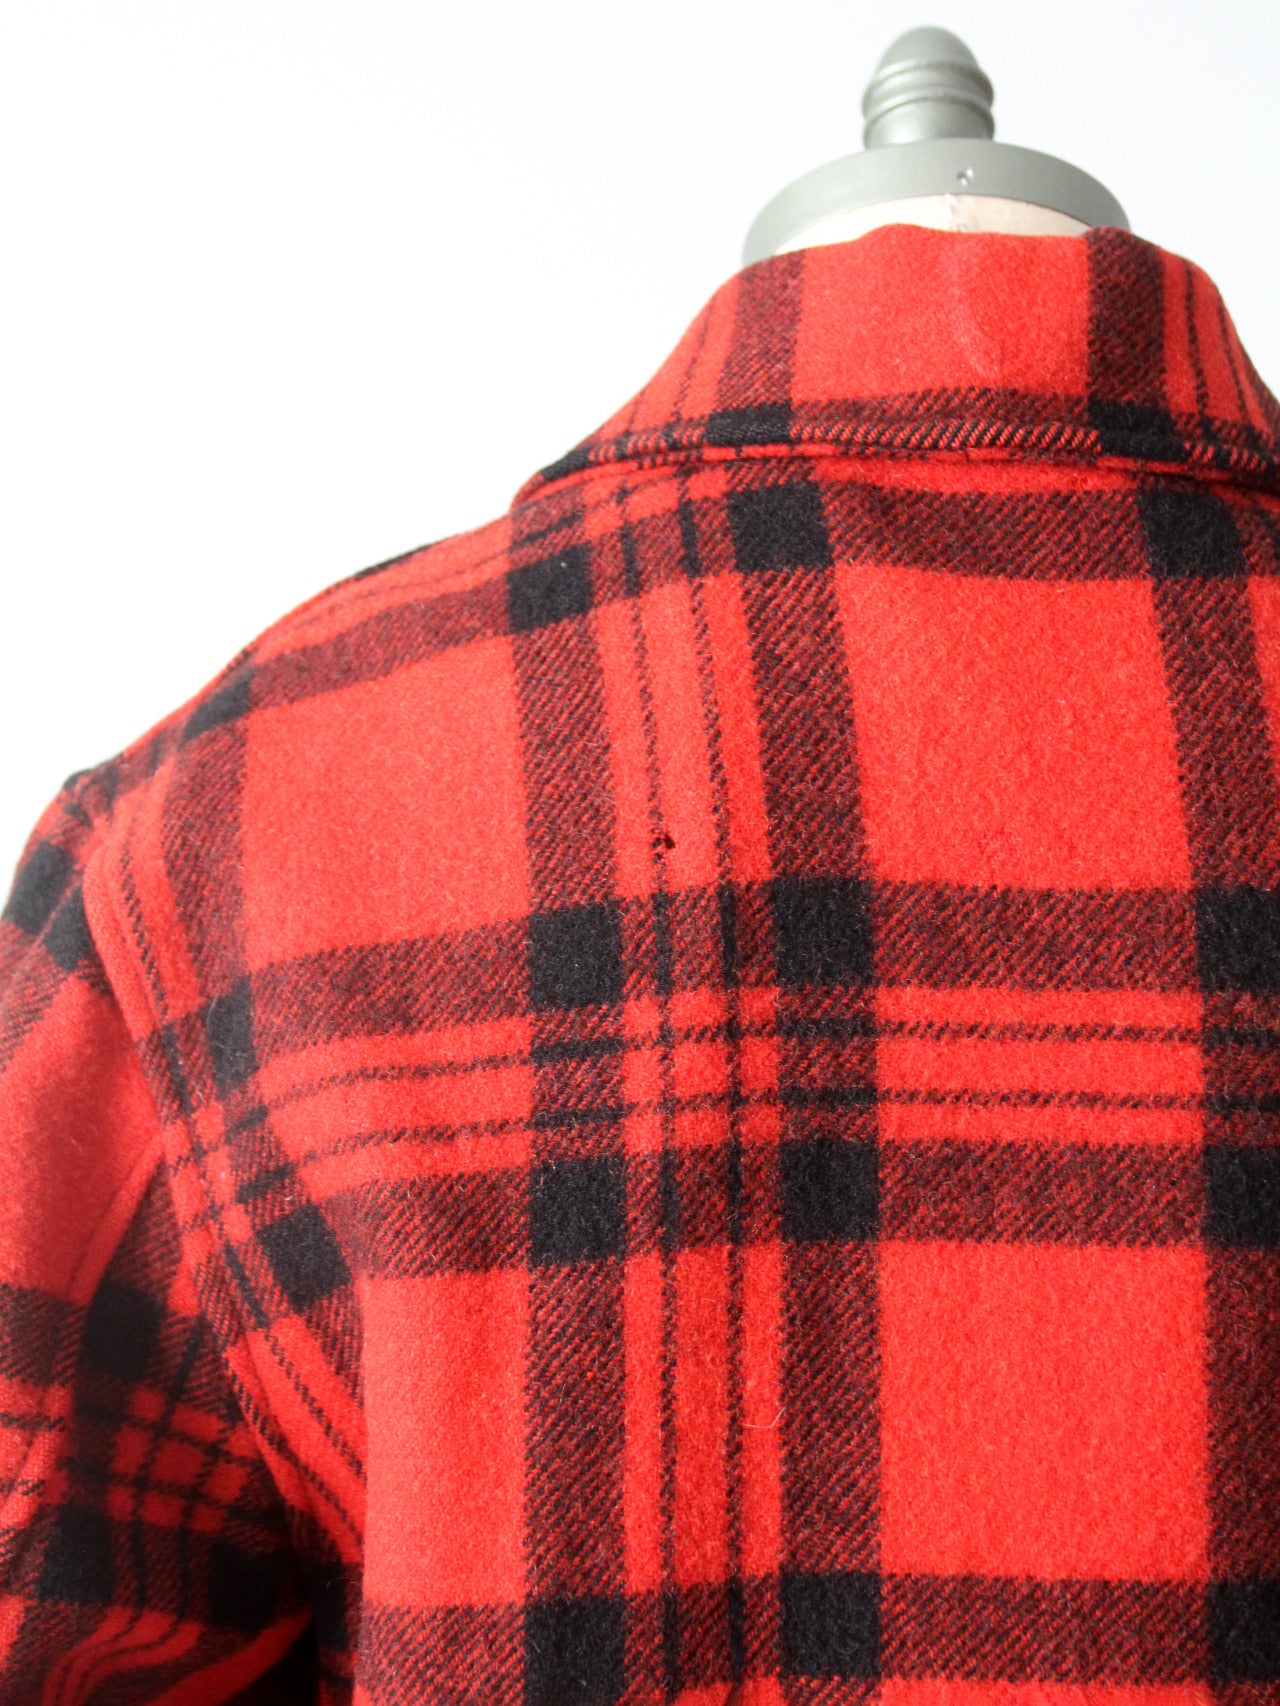 Vtg 60's Minnesota Woolen Co Flannel Plaid Shirt L